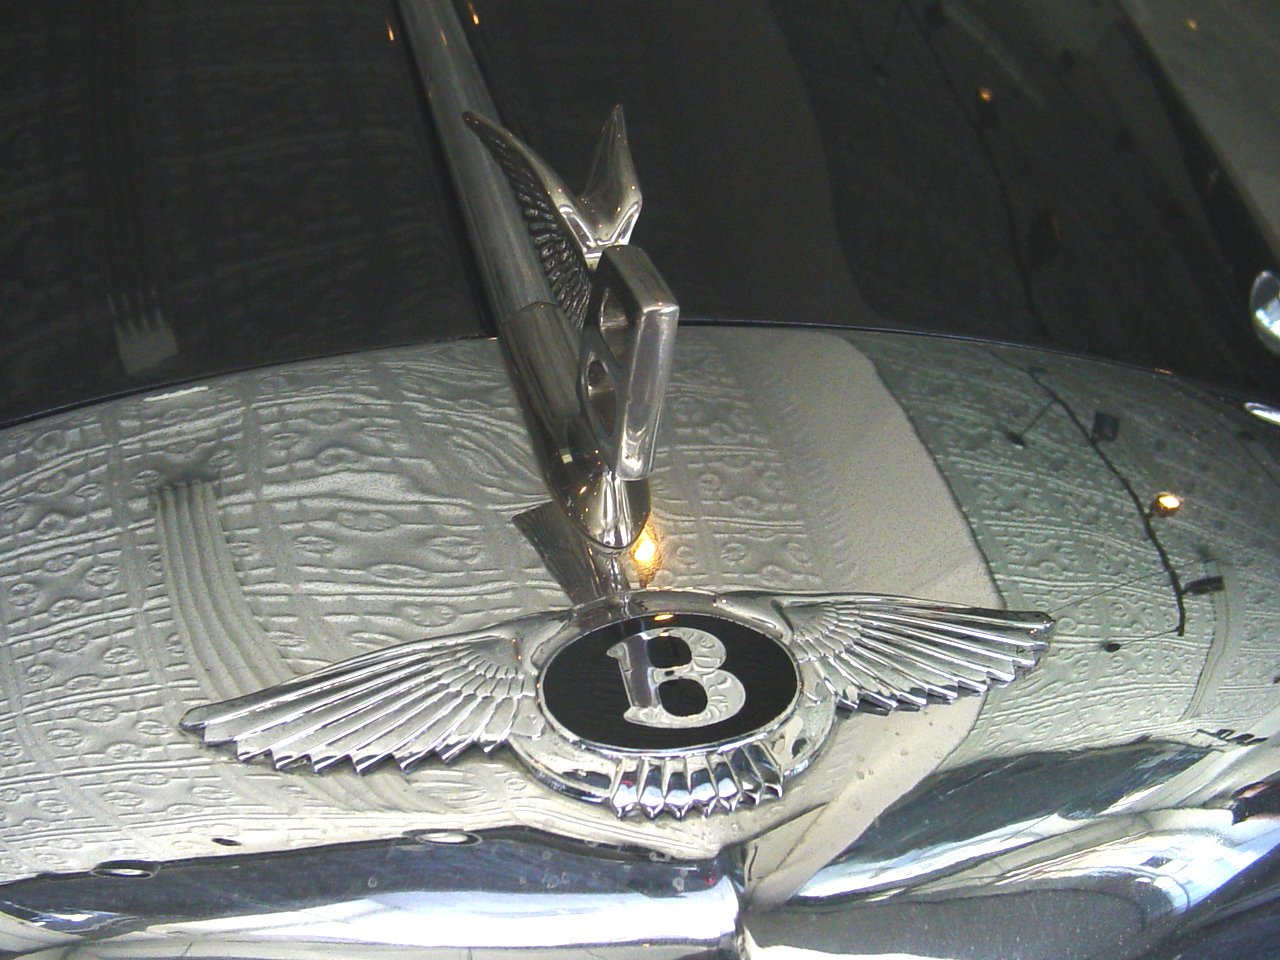 a close - up s of the emblem on an antique car